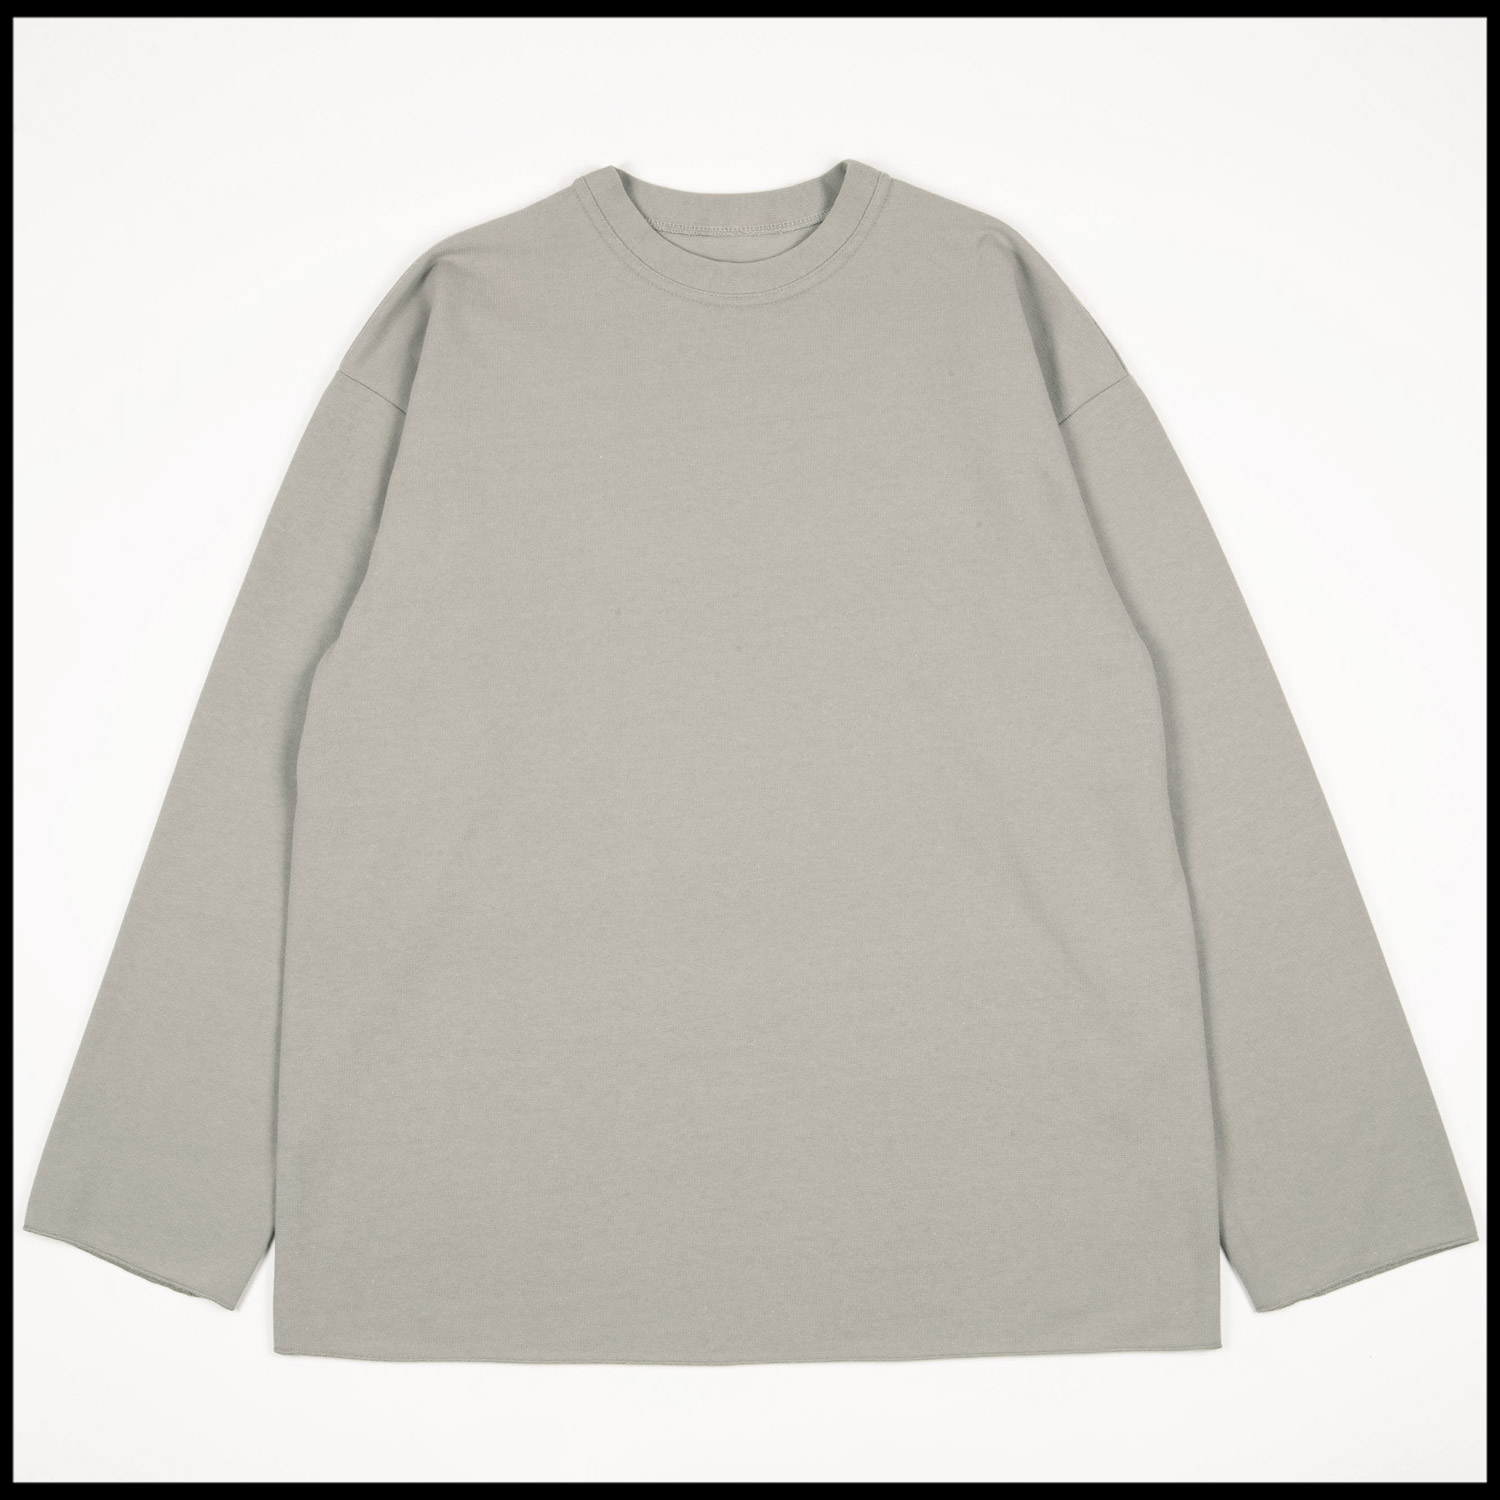 MARINE W t-shirt in Mint grey color by Arpenteur Women's